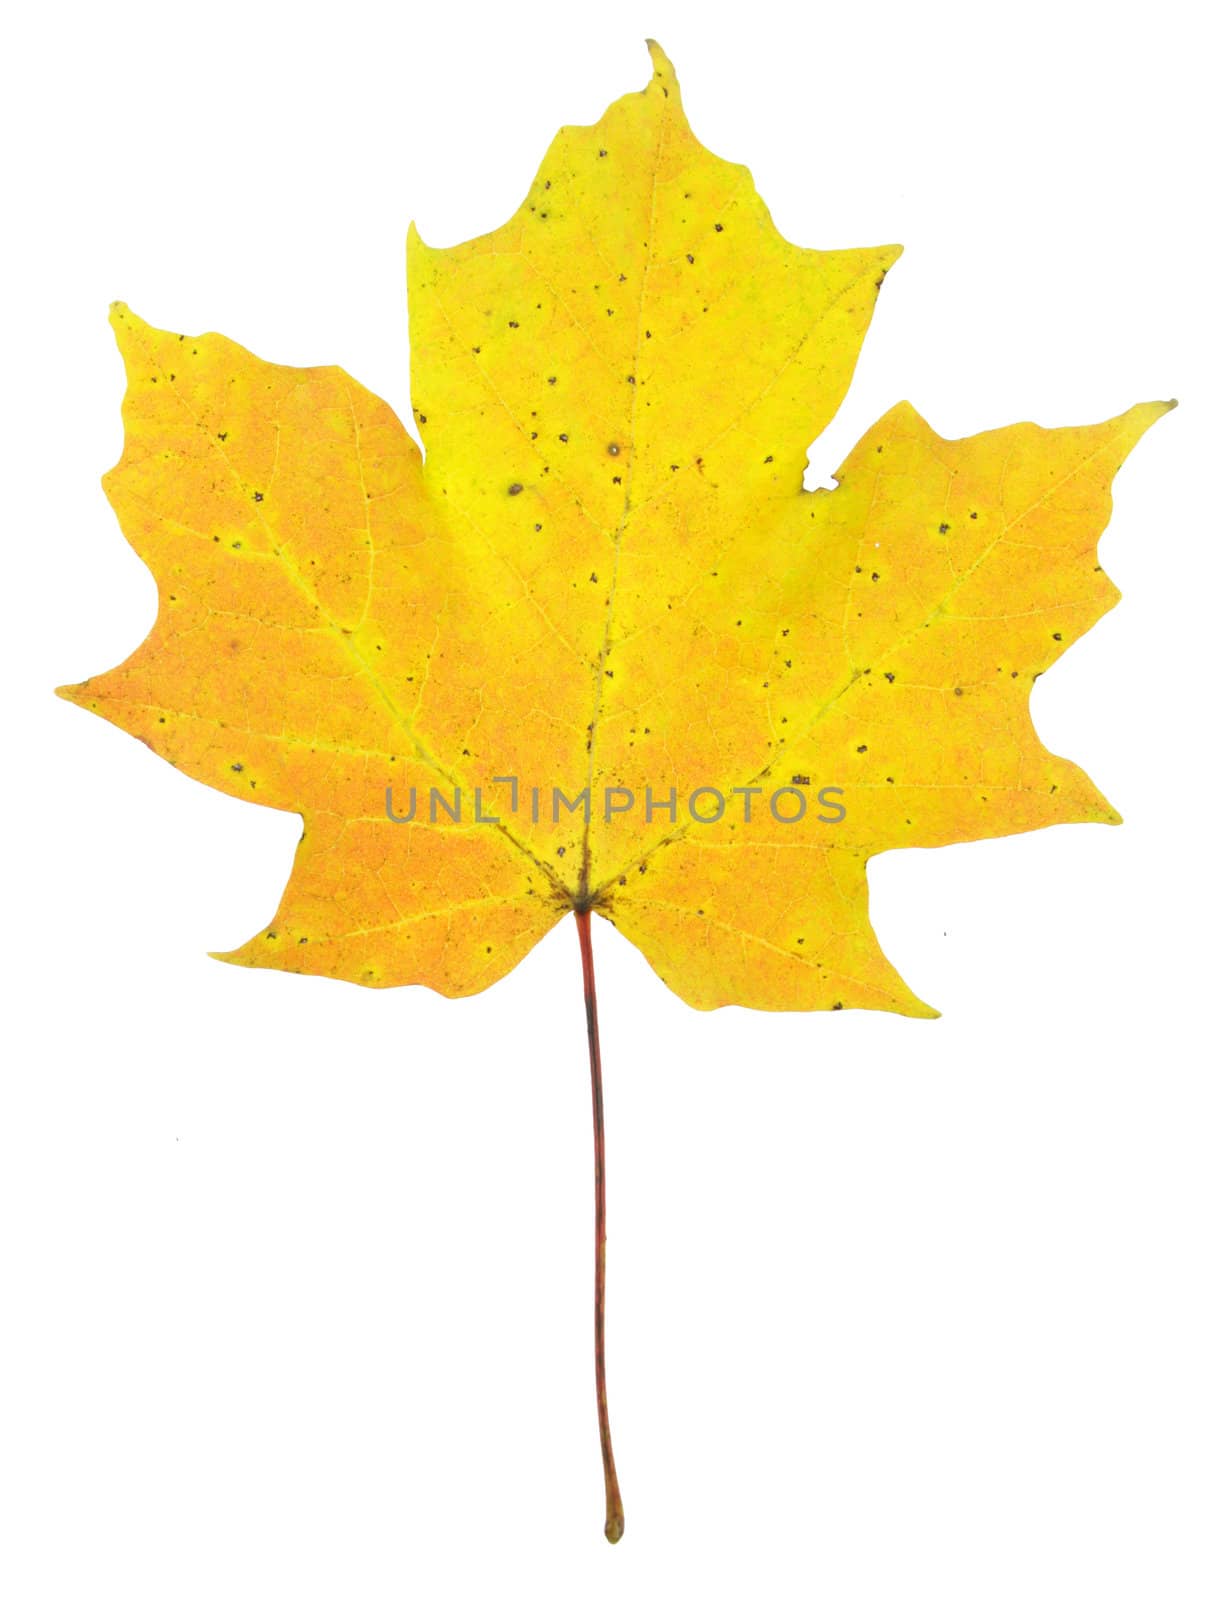 Yellow/Orange Maple Leaf
 by ca2hill